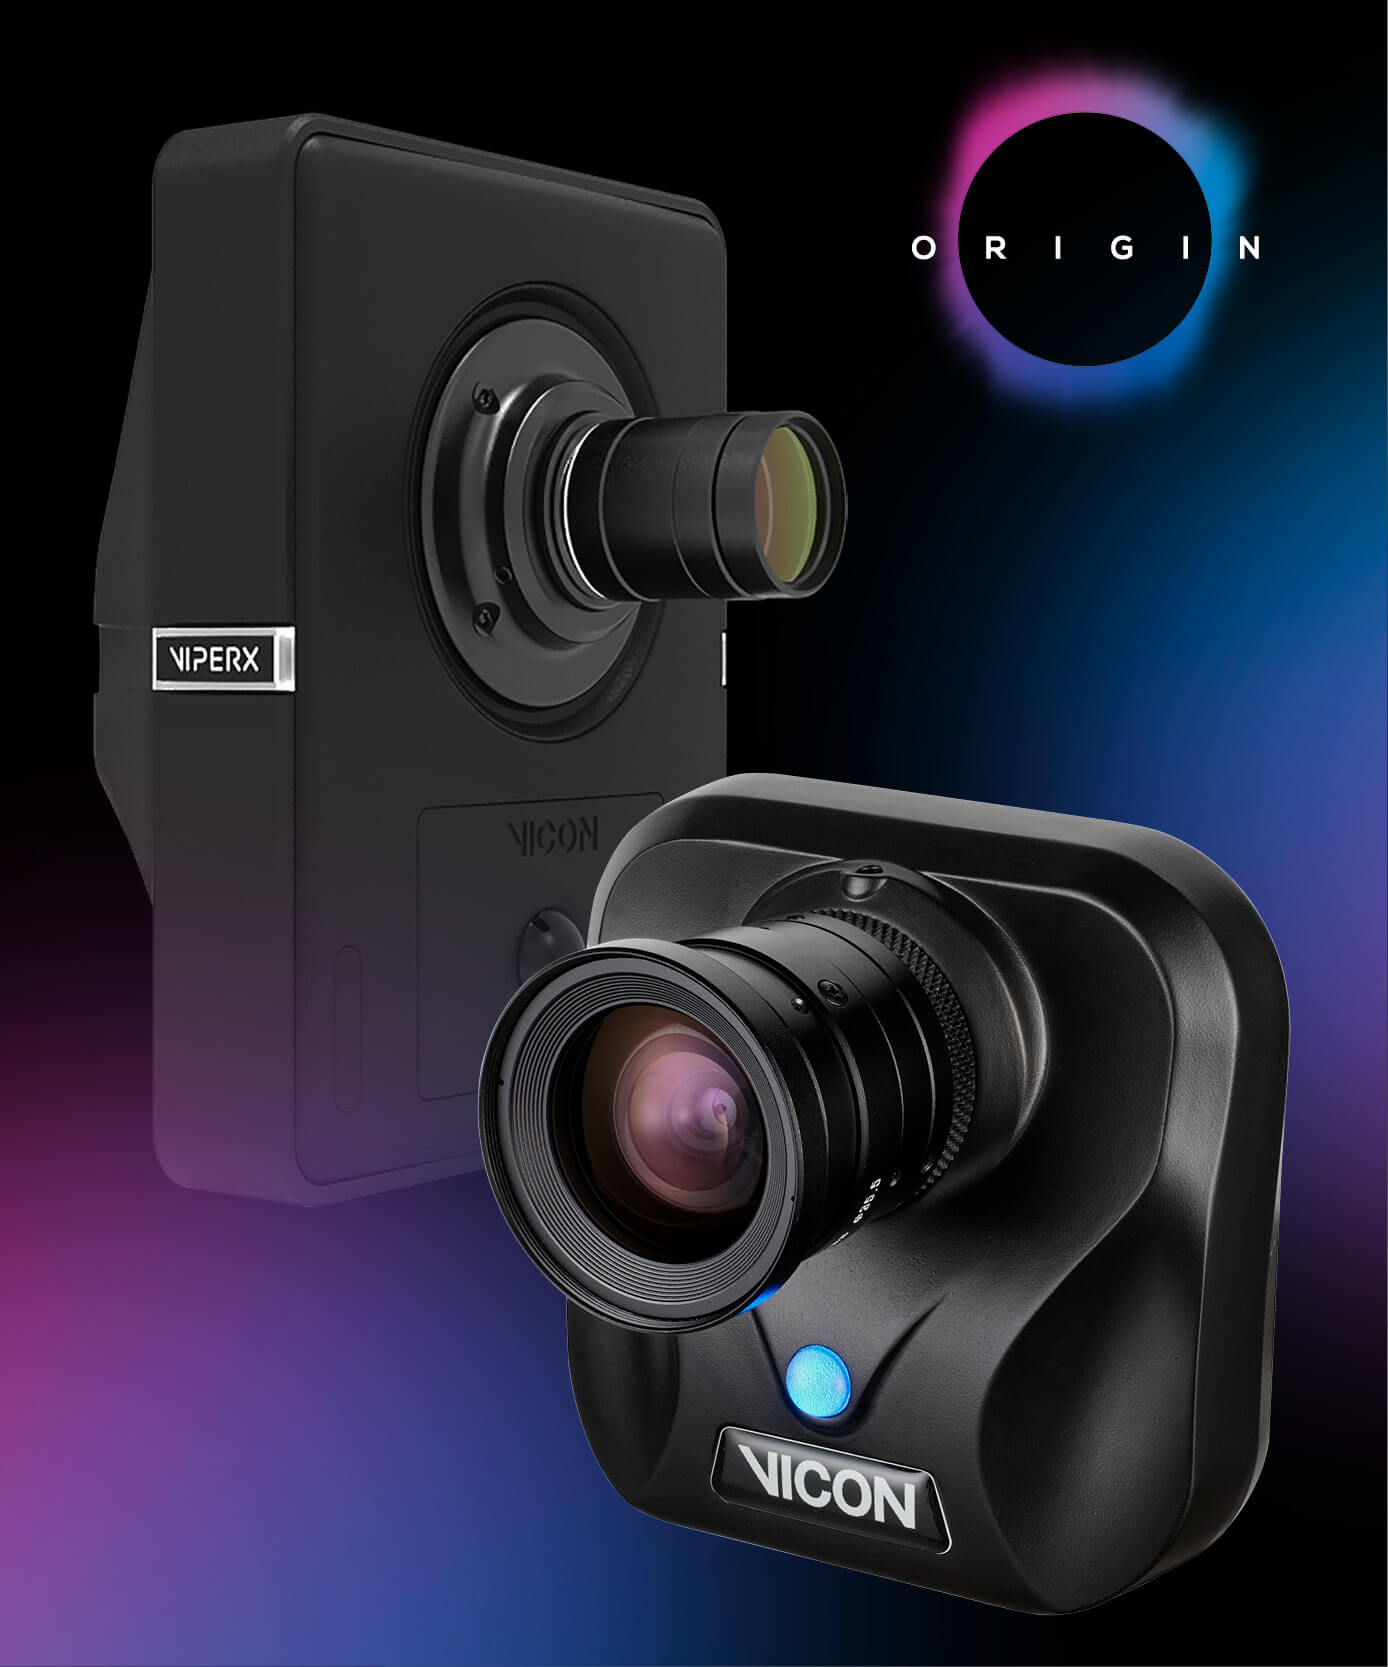 Viper and ViperX cameras